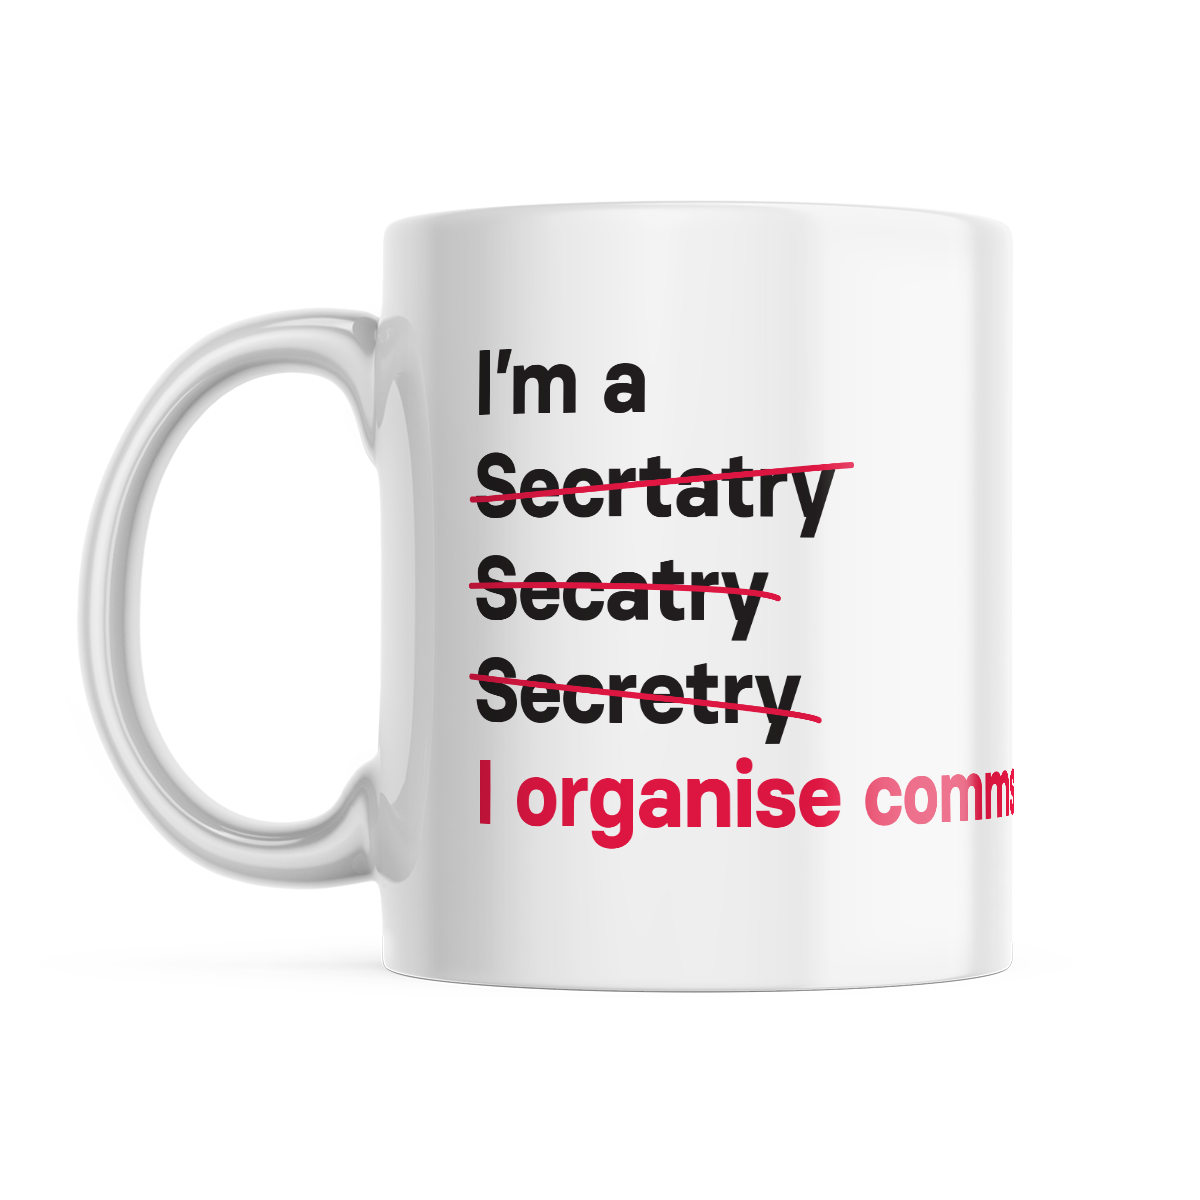 I'm a Secretary